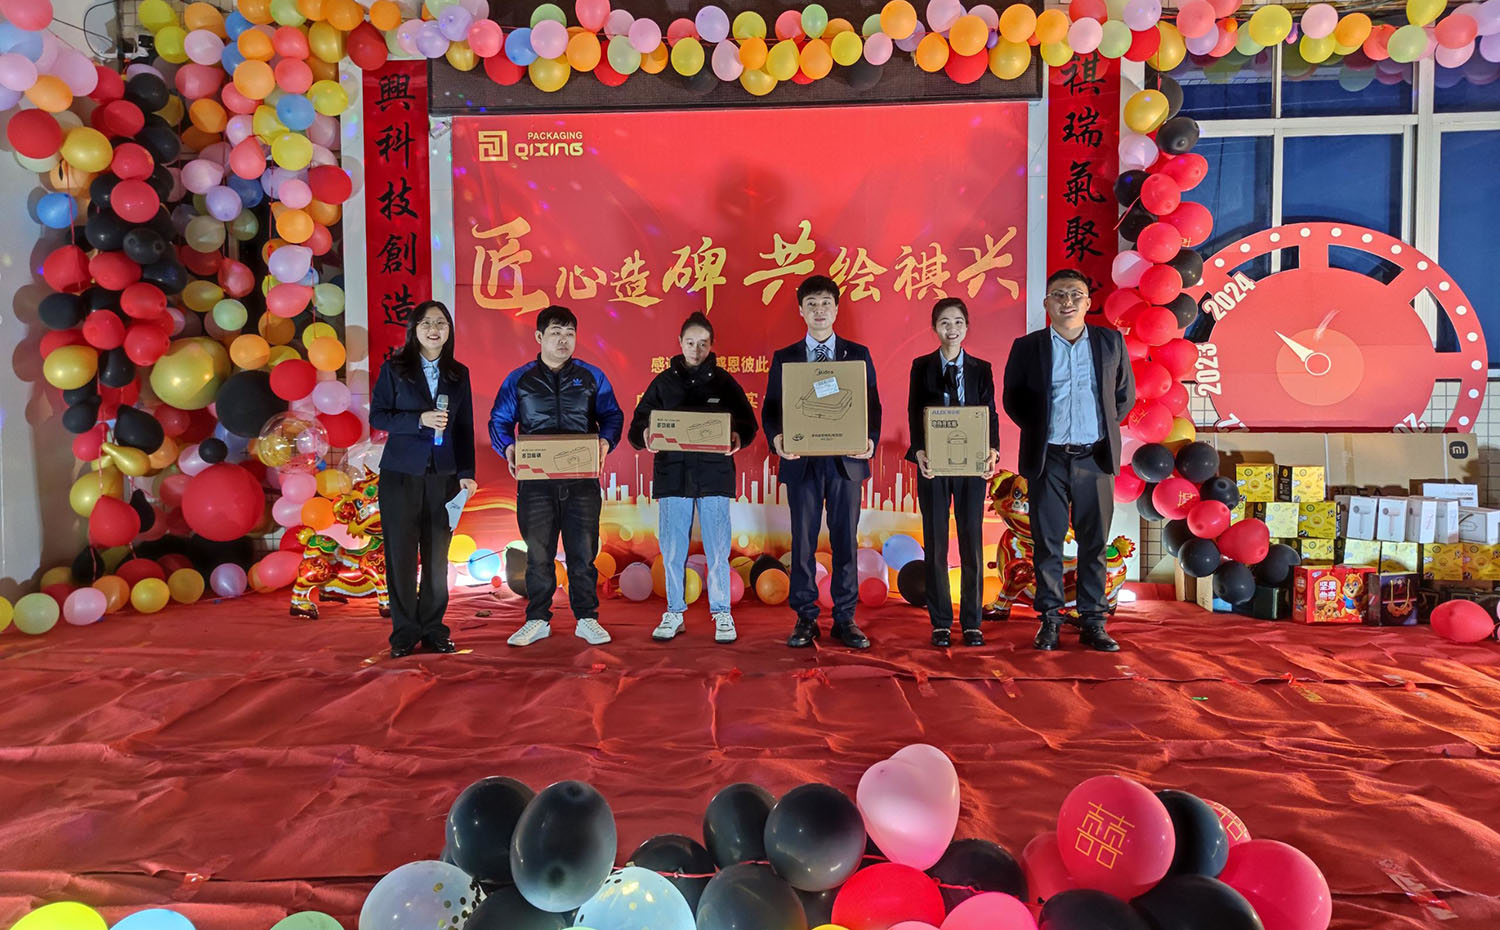 Guangdong Qixings årlige fest